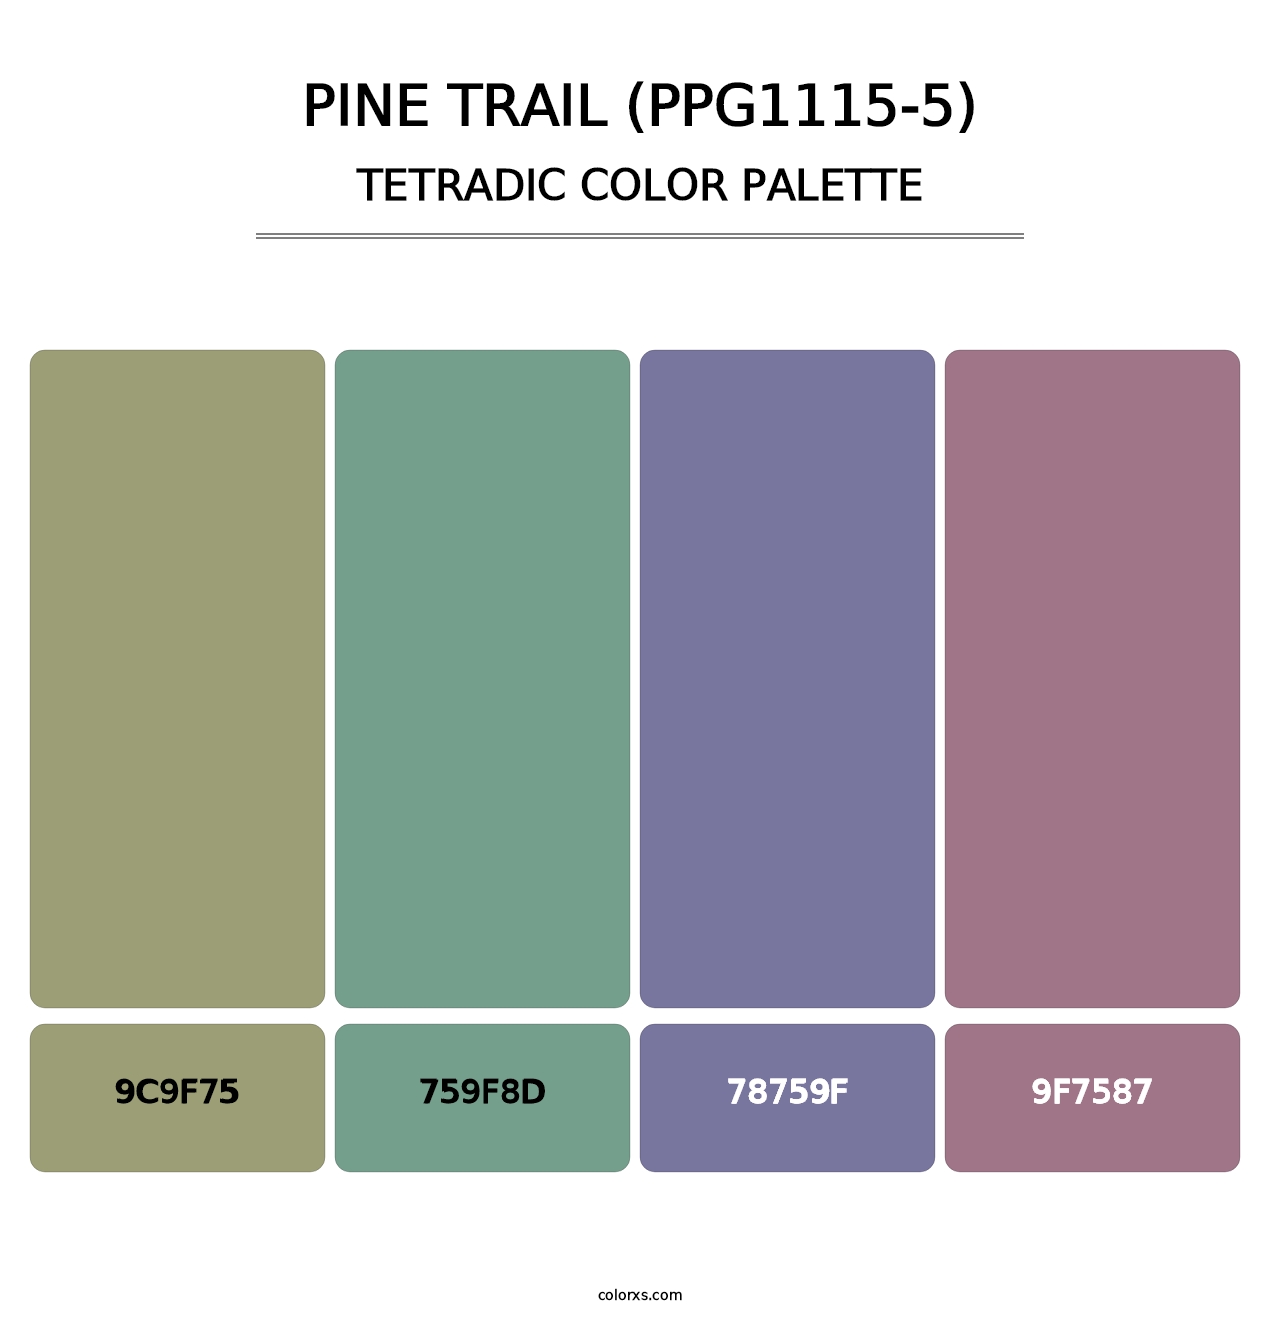 Pine Trail (PPG1115-5) - Tetradic Color Palette